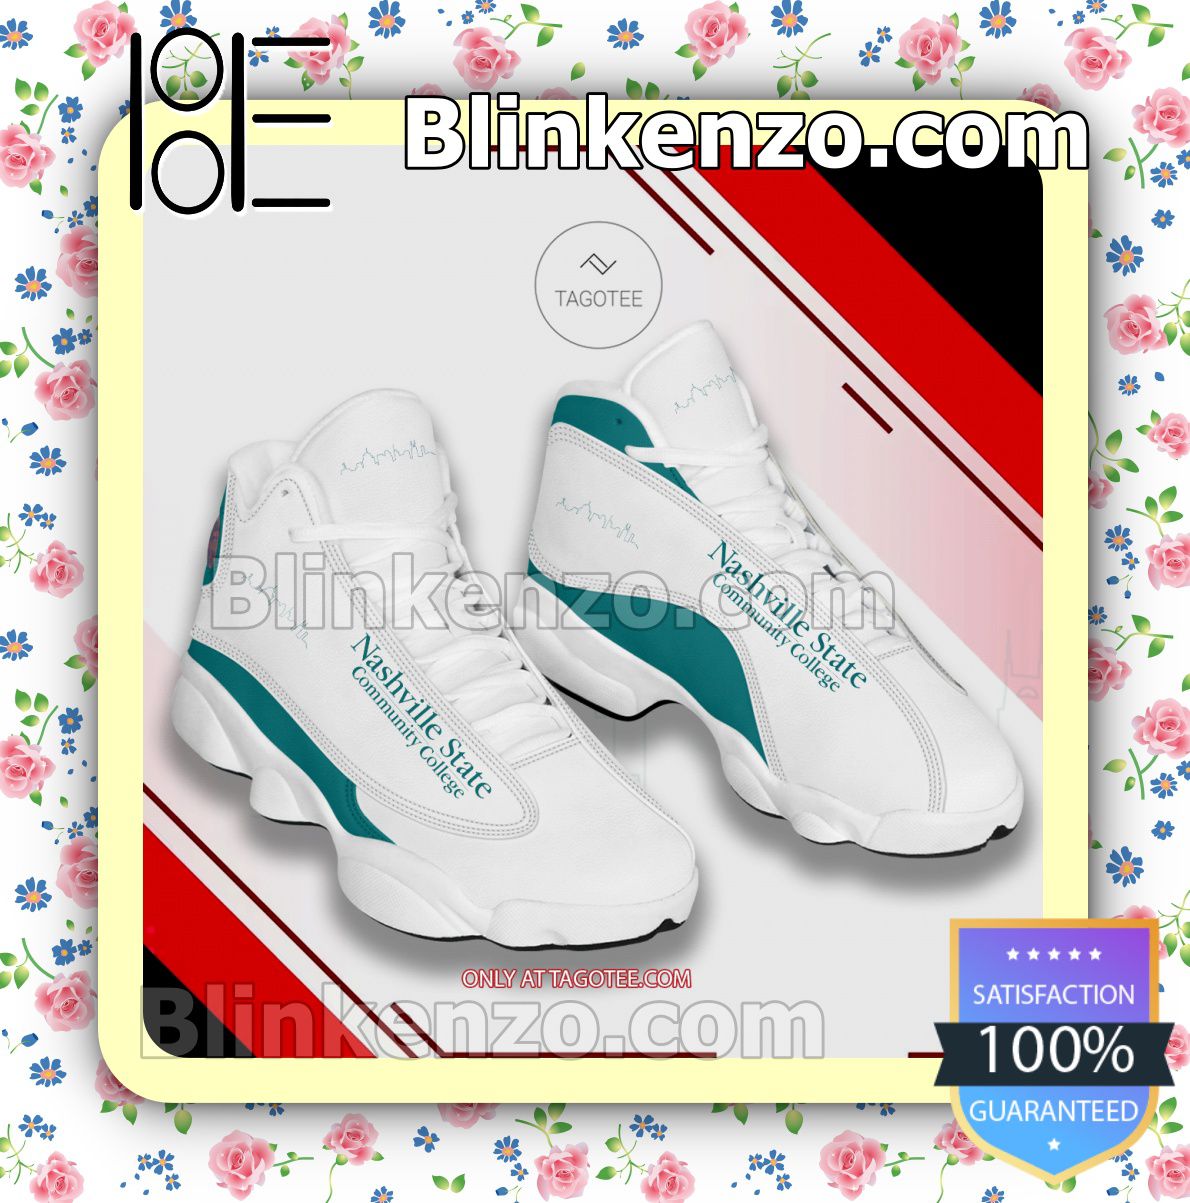 Louis Vuitton Mickey Mouse Disney Brown Jordan Running Shoes - Blinkenzo